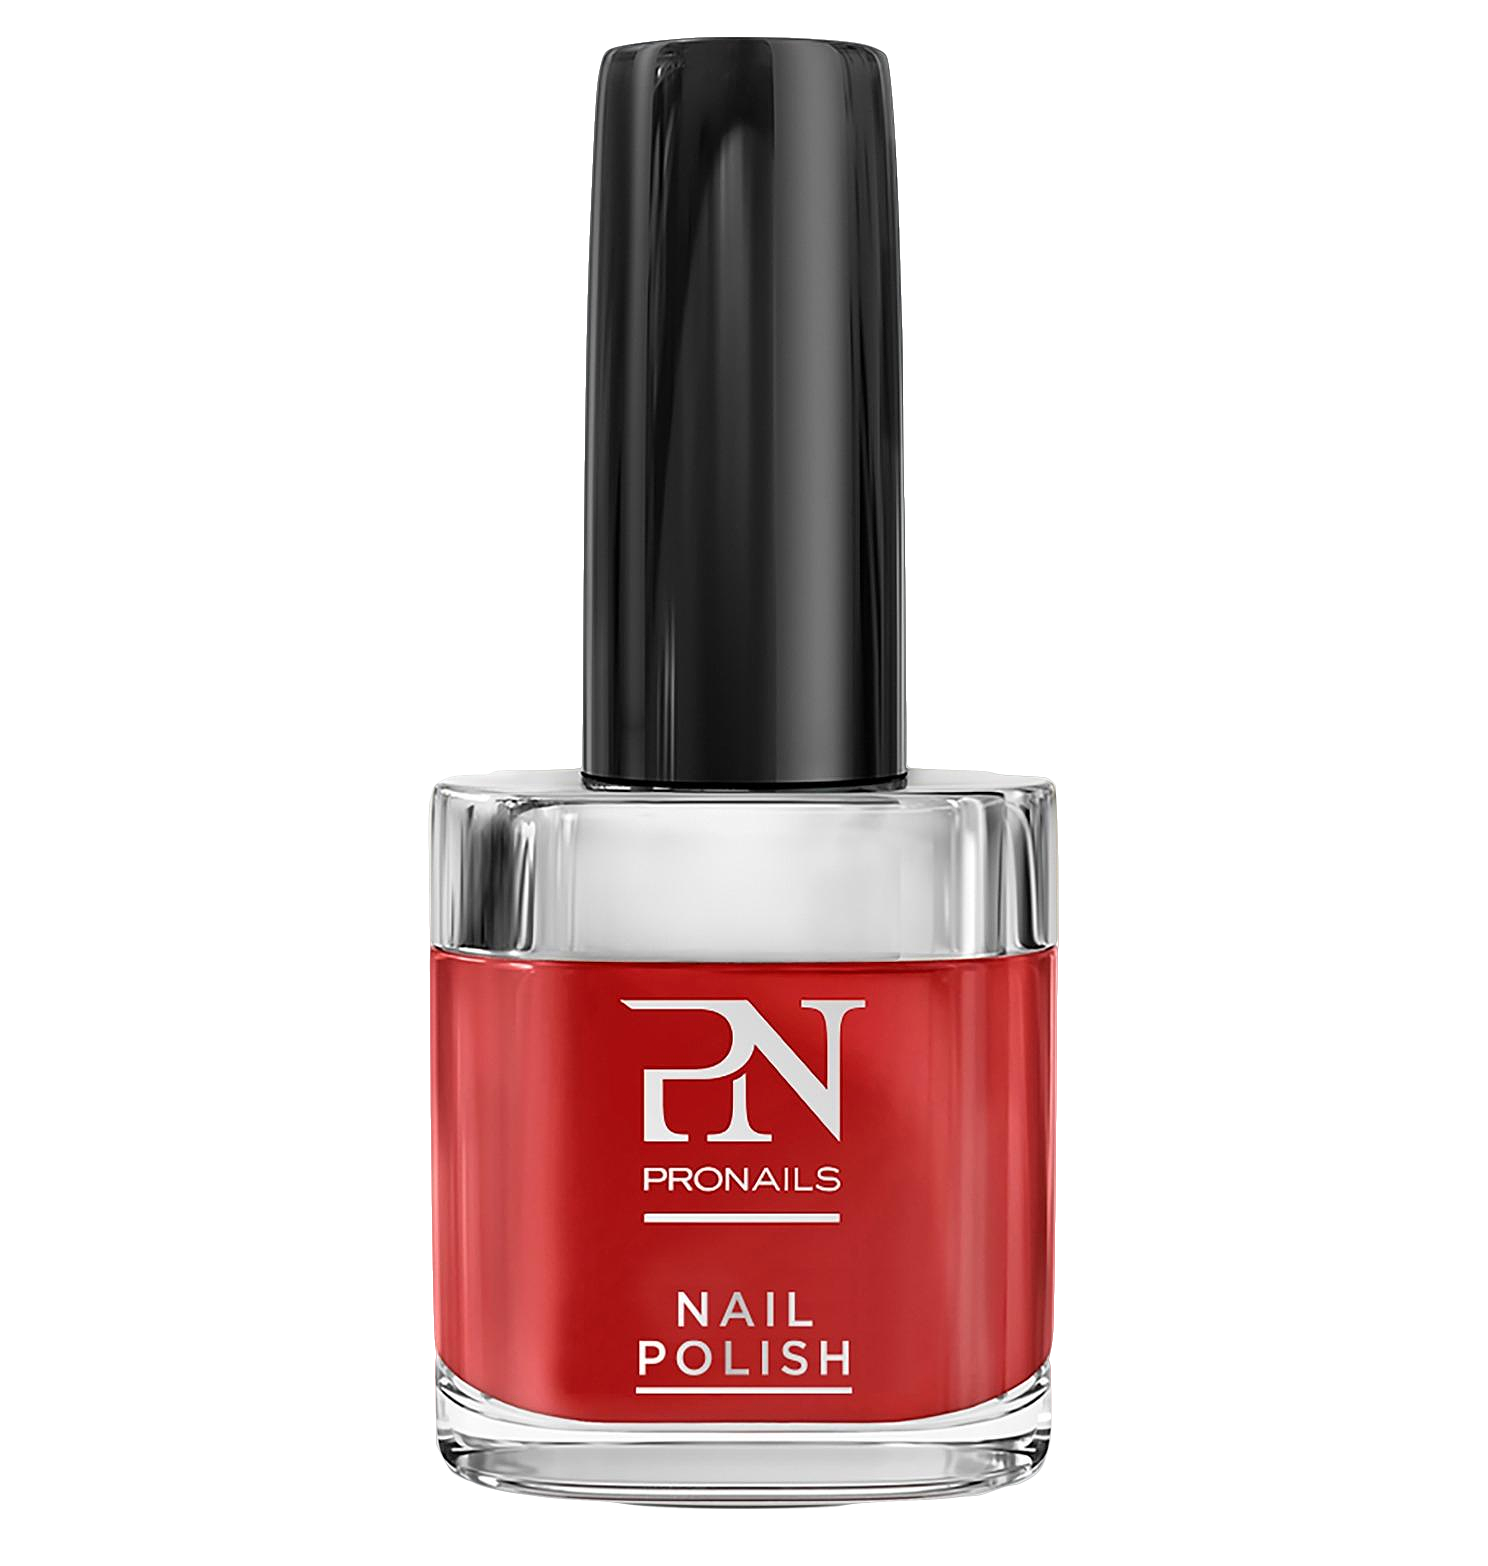 PN SELFCARE - Red nail polish 10ml - Vegan Cruelty Free